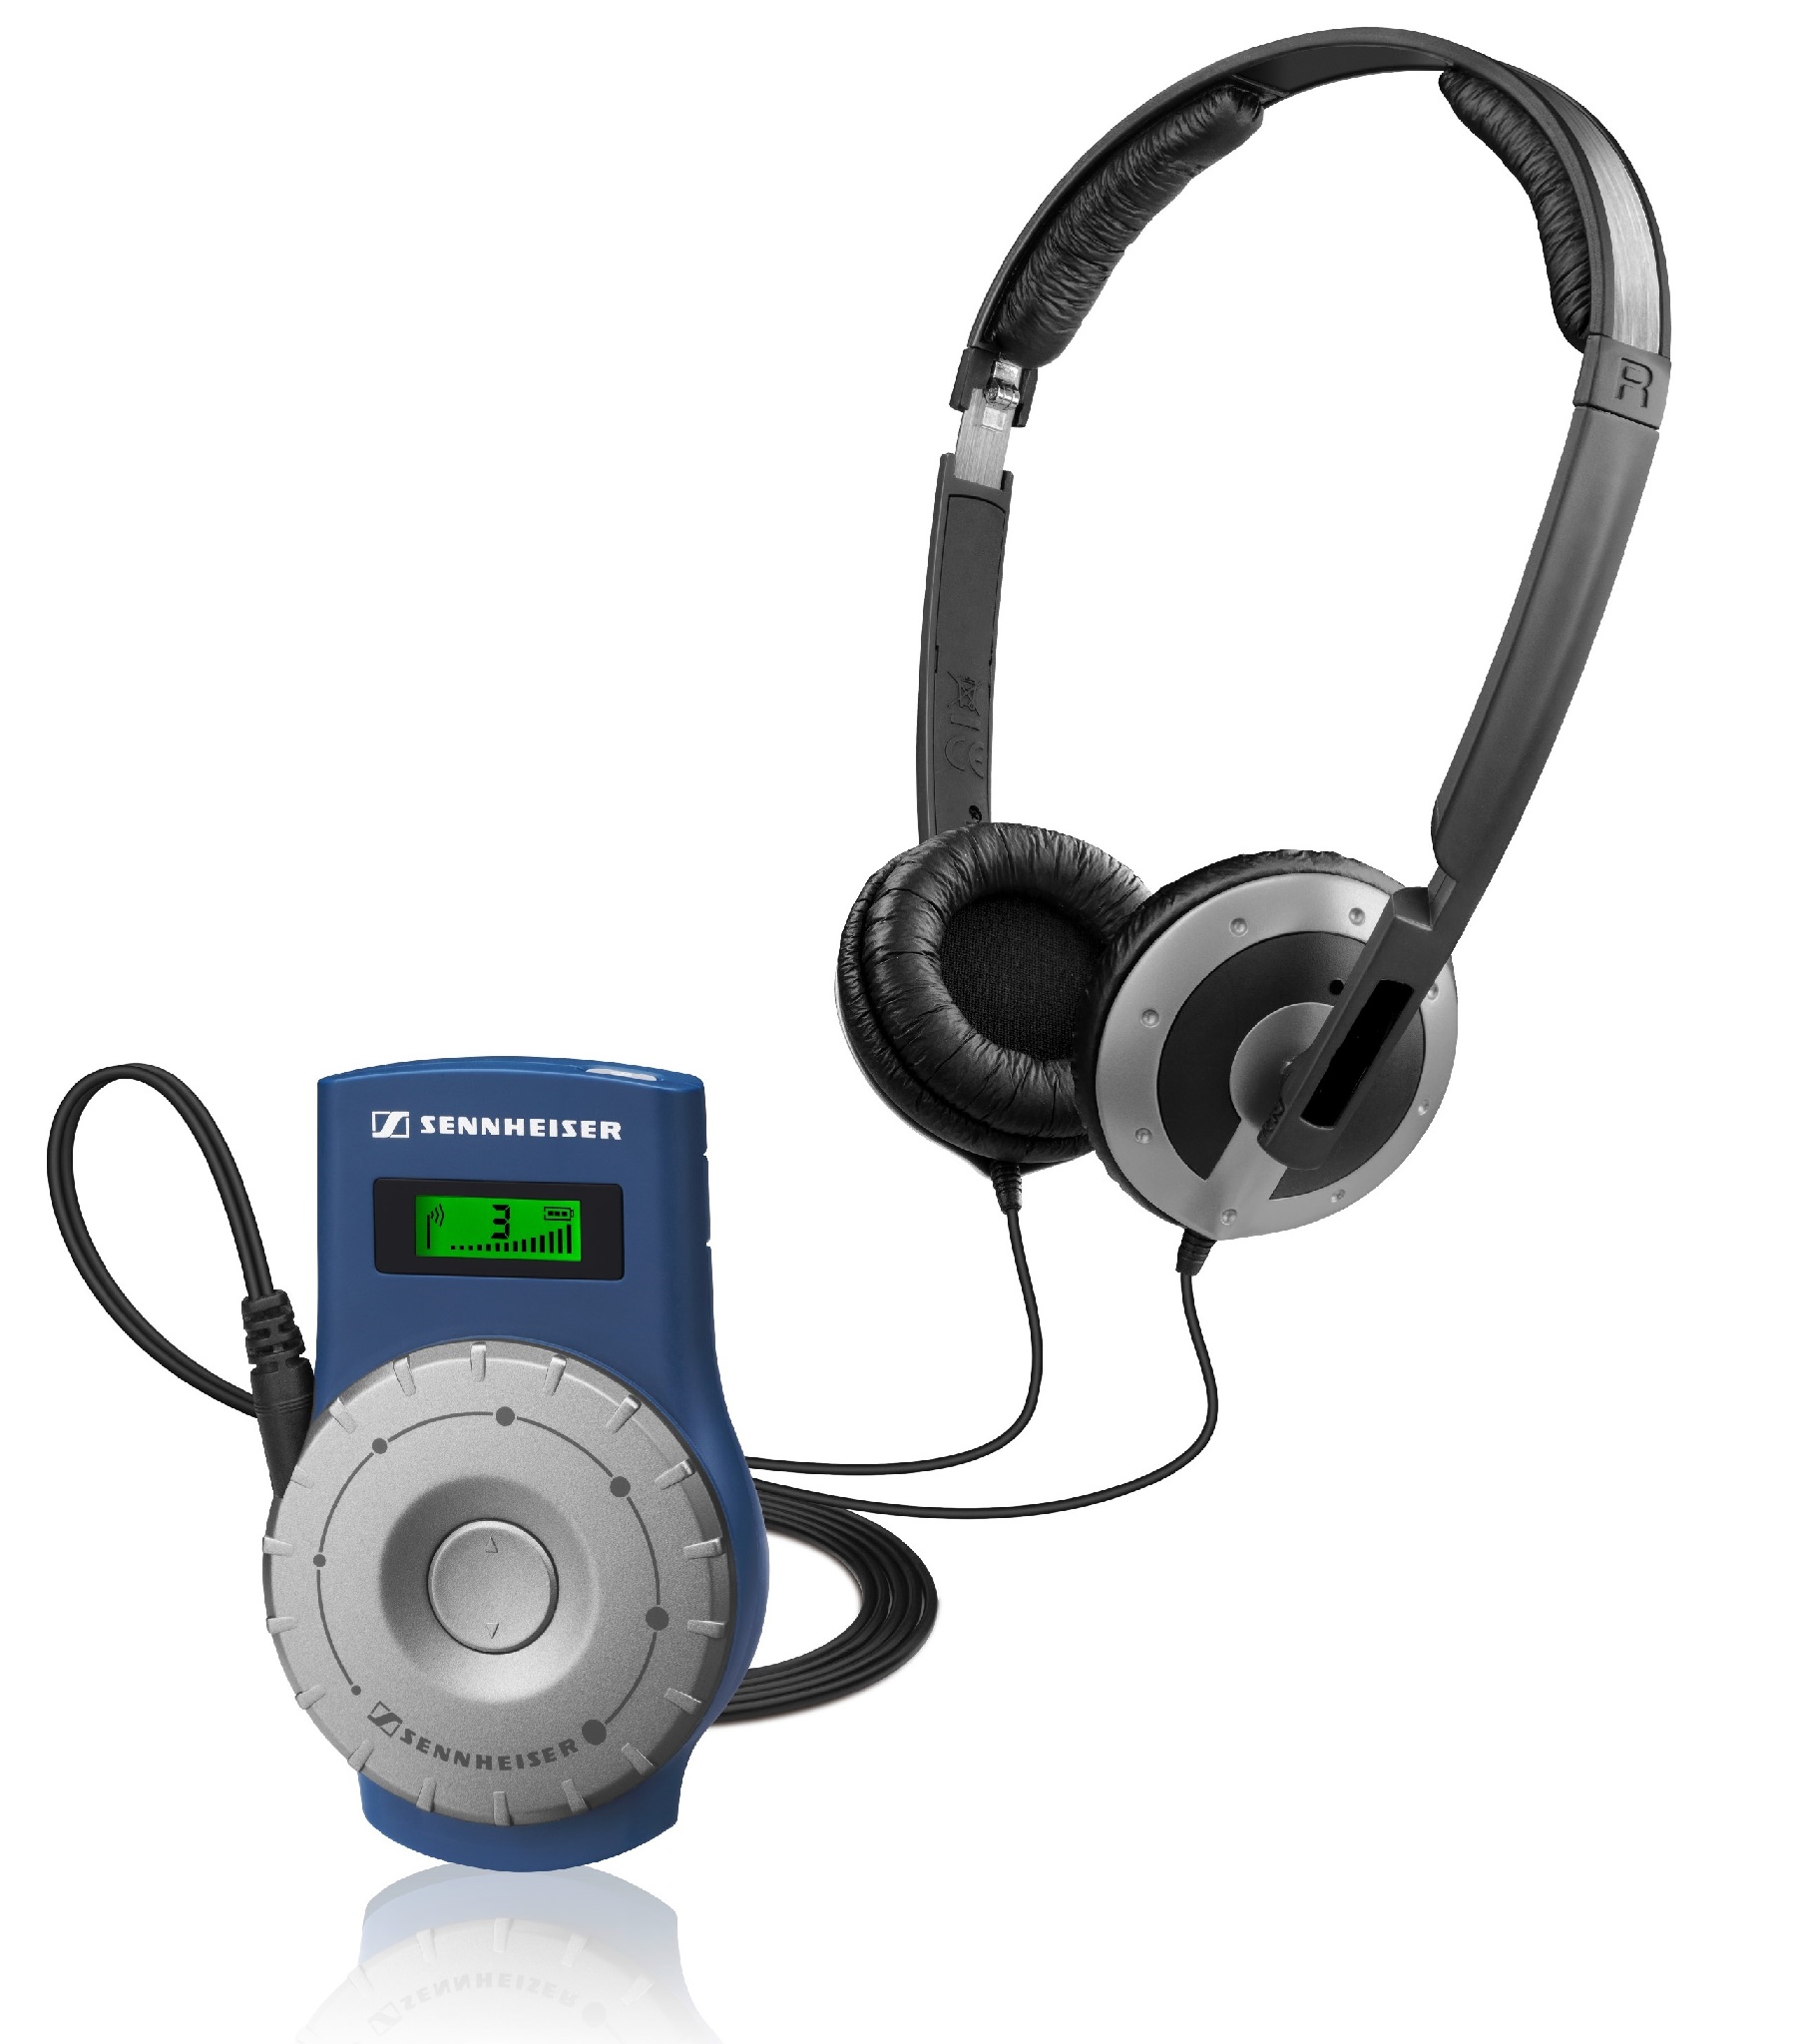 Sennheiser pocket receiver and headphones